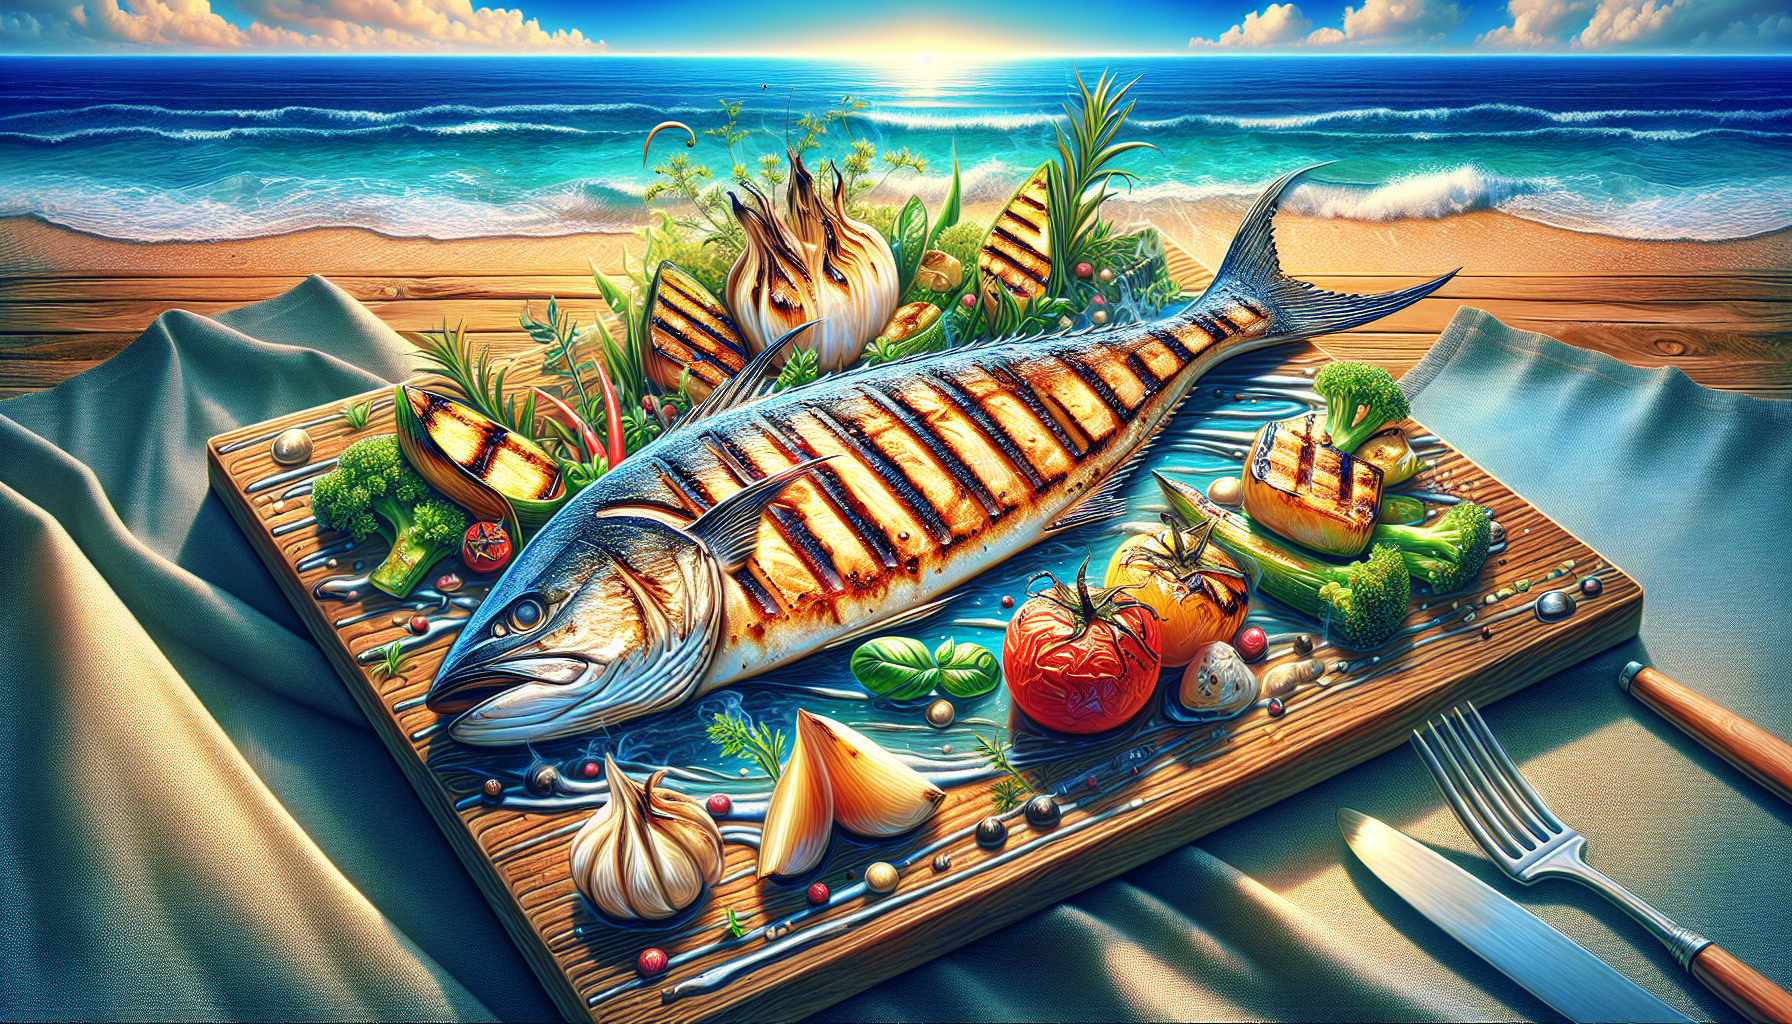 Ocean Delight: Grilled Kingfish Recipe